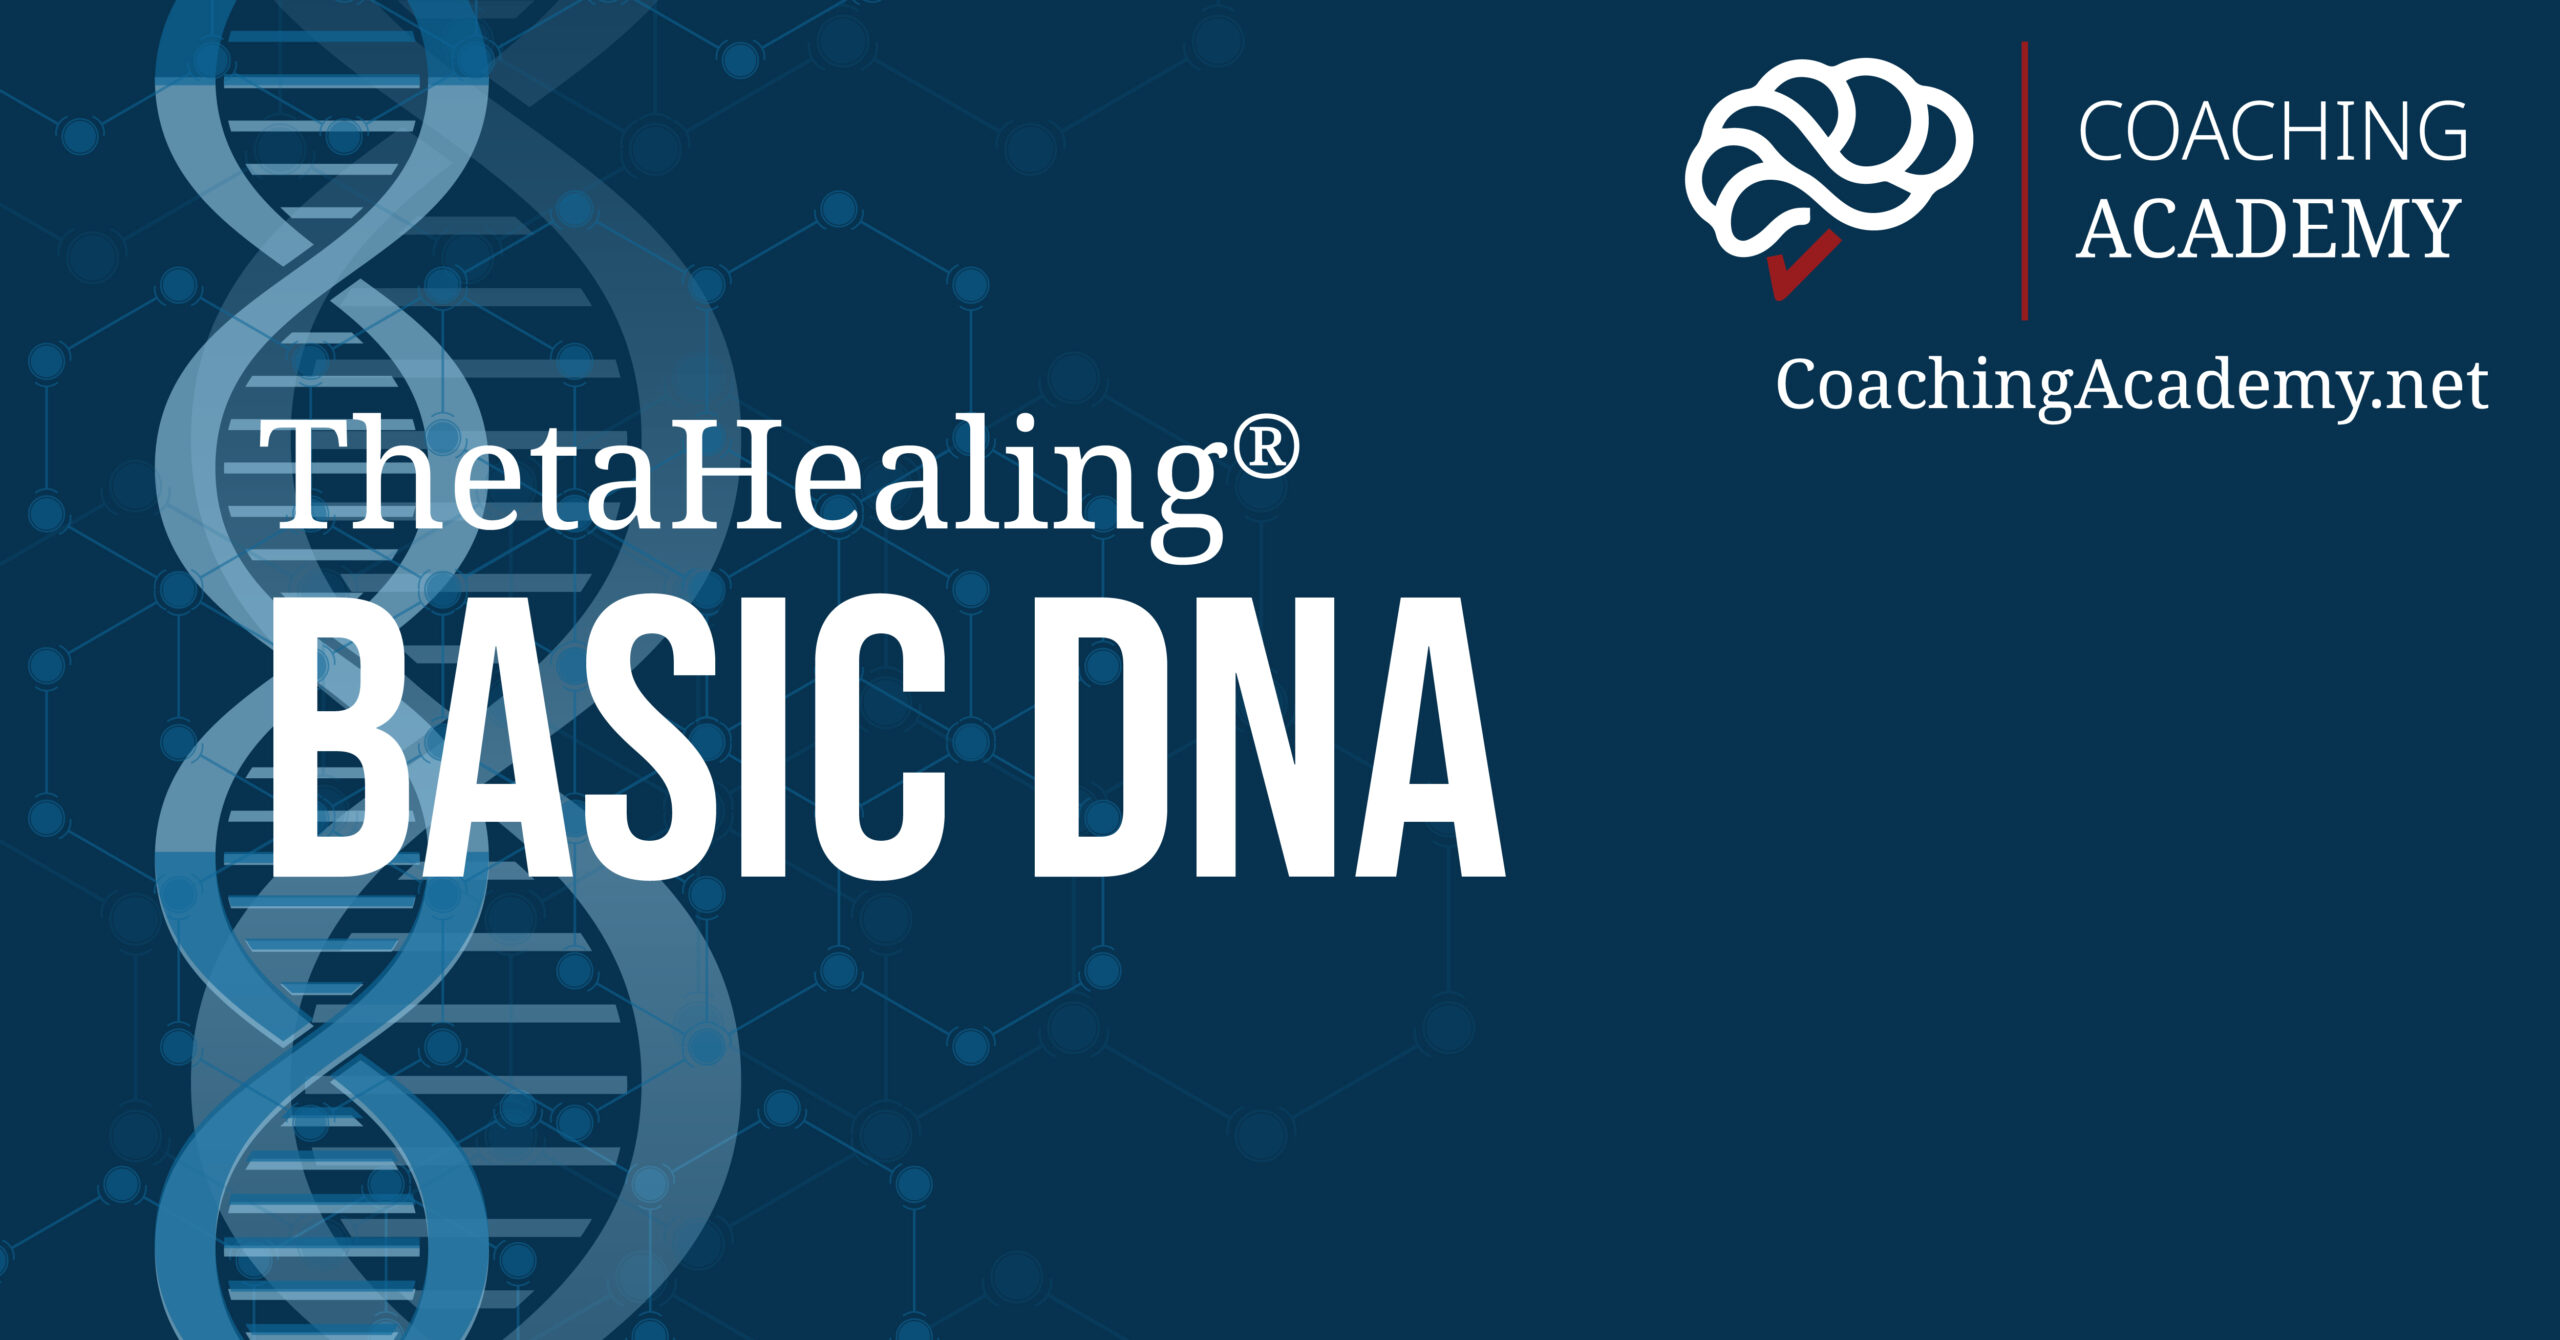 ThetaHealing Basic DNA Course What is ThetaHealing